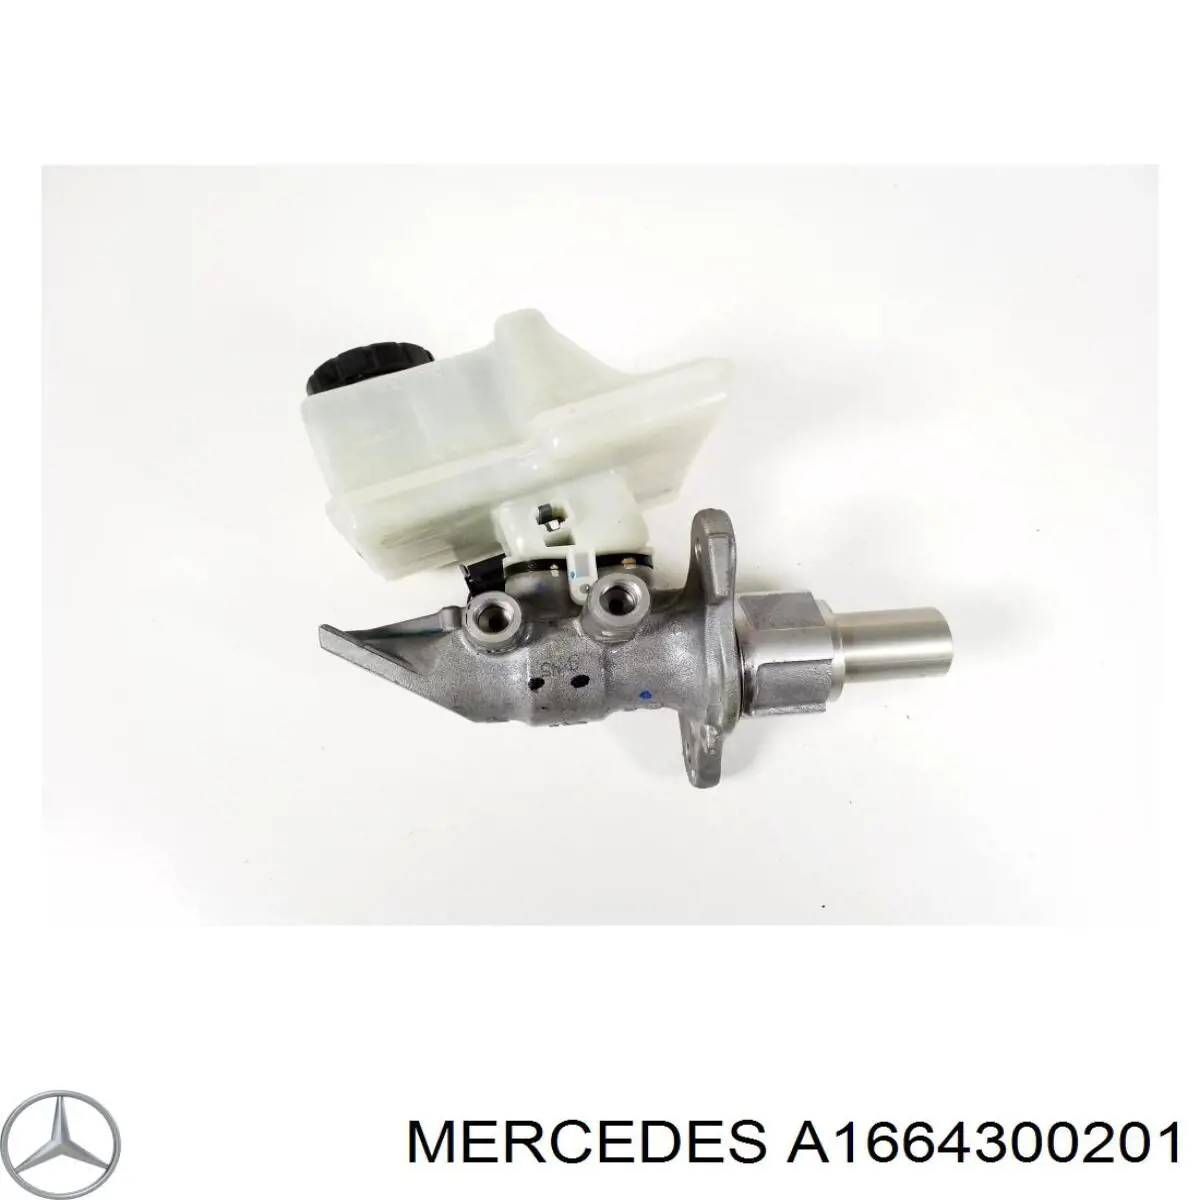 A1664300201 Mercedes cilindro mestre do freio